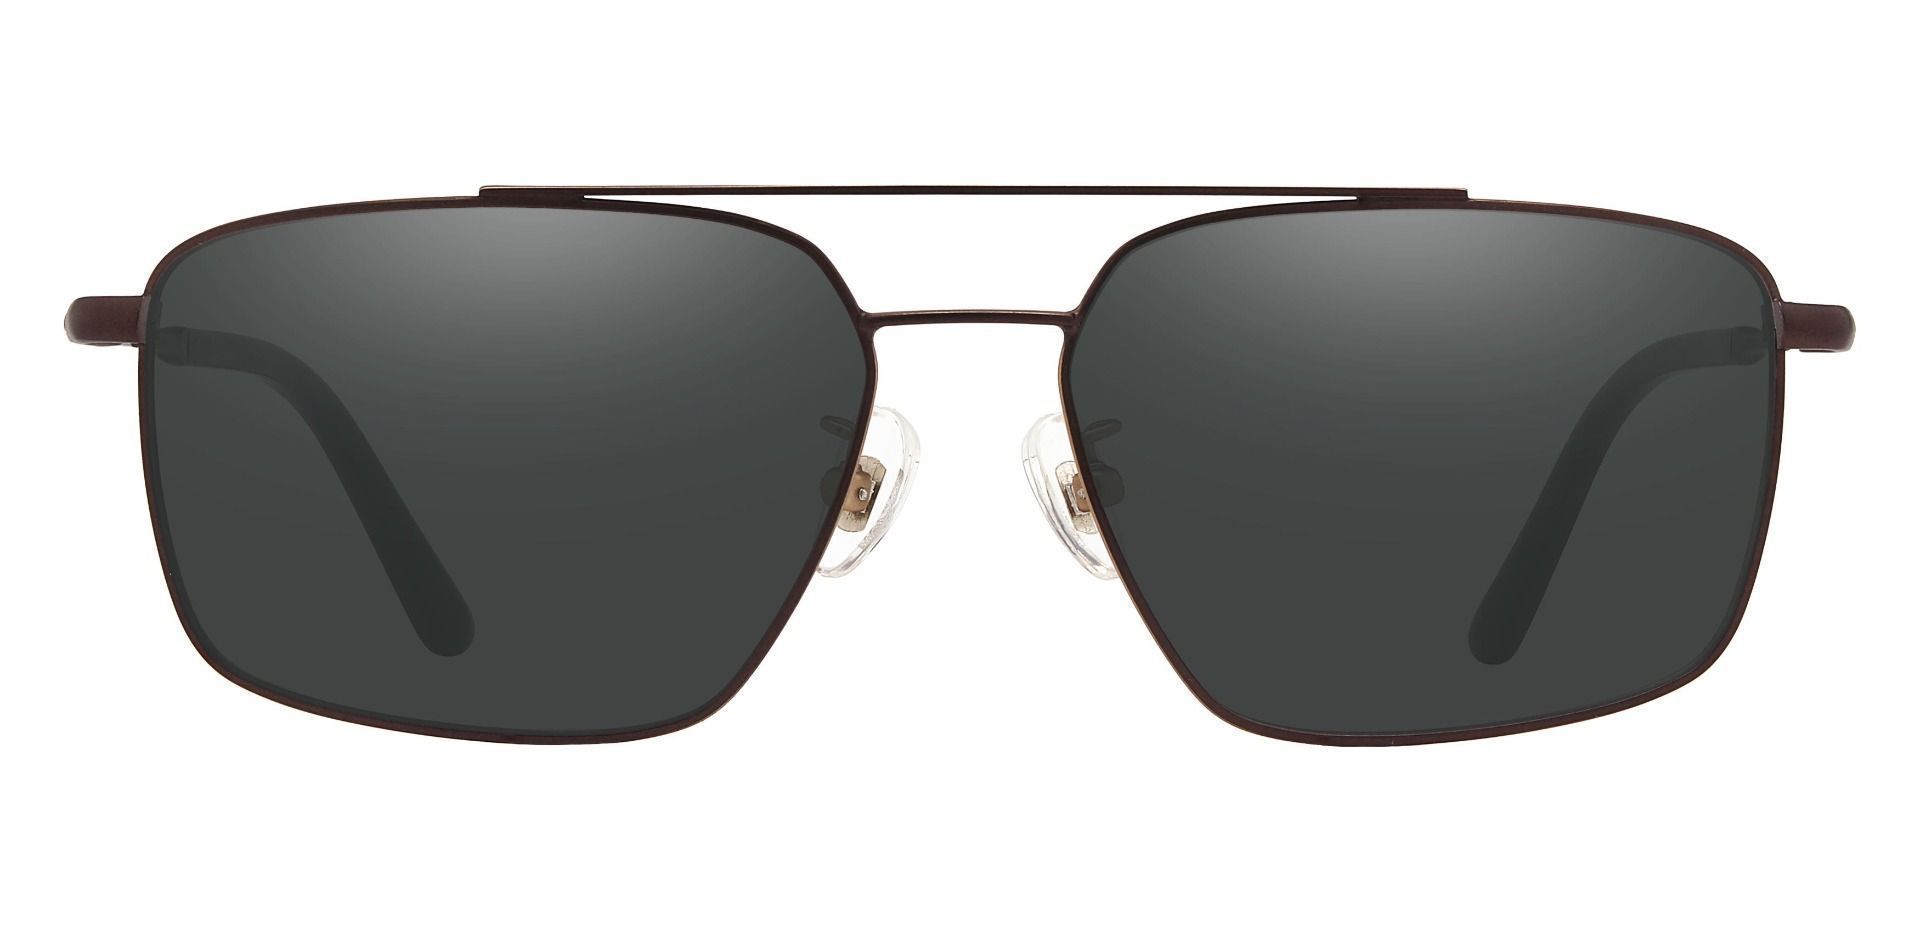 Barlow Aviator Progressive Sunglasses - Brown Frame With Gray Lenses